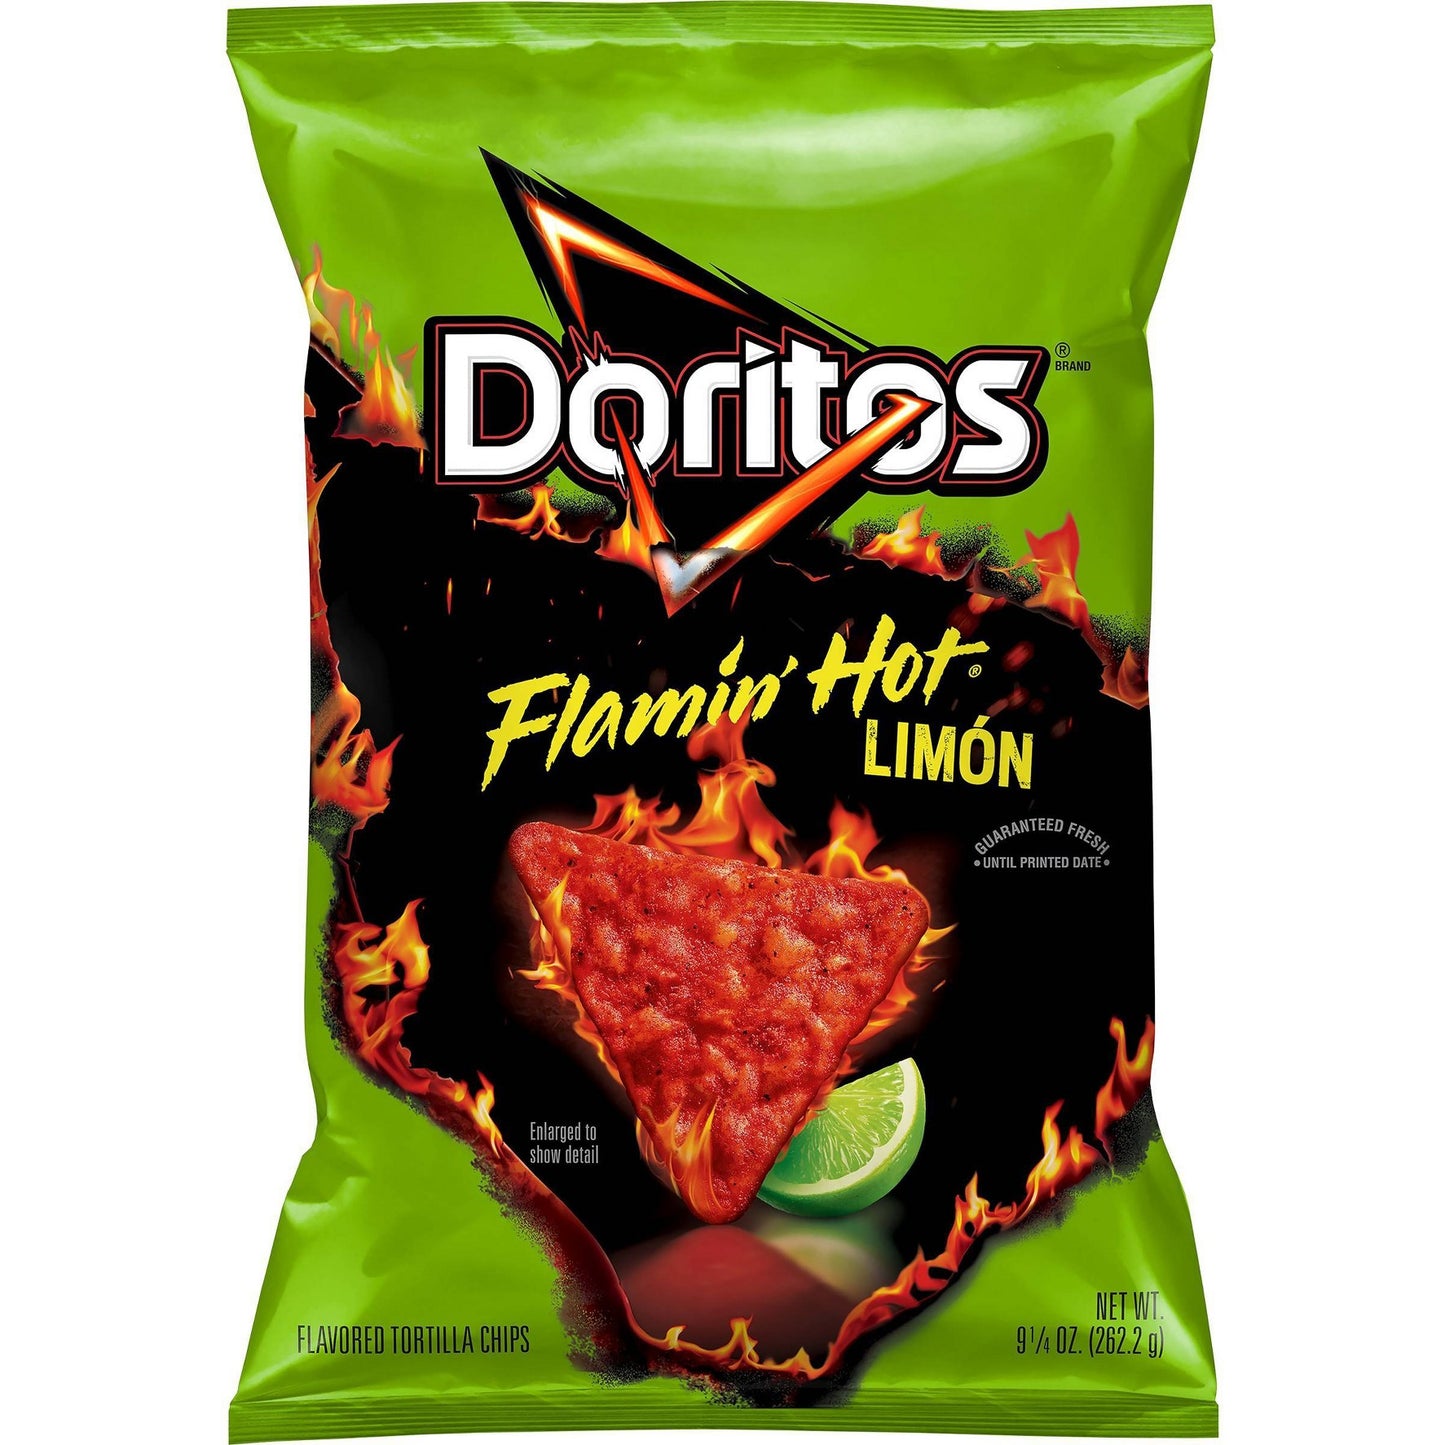 Doritos Flamin Hot Limon - 9.75 - RARE EXOTIC CHIPS